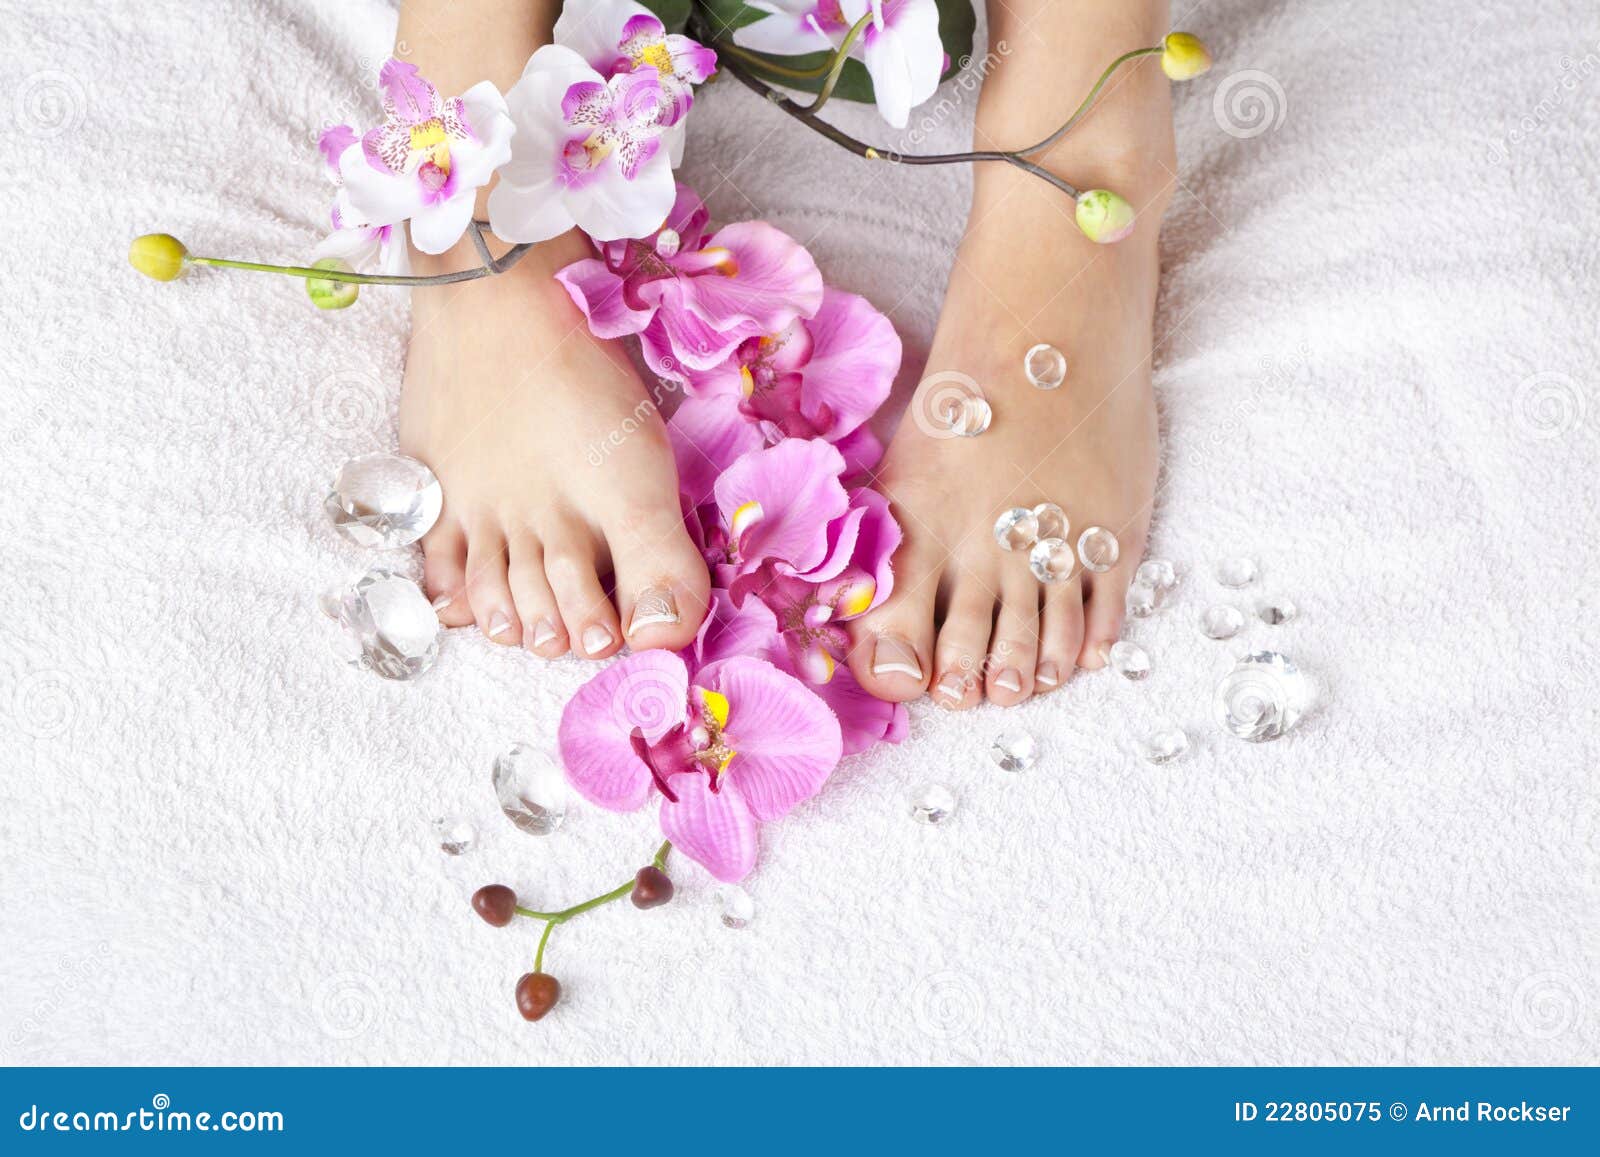 beauty concept - acrylic toenails